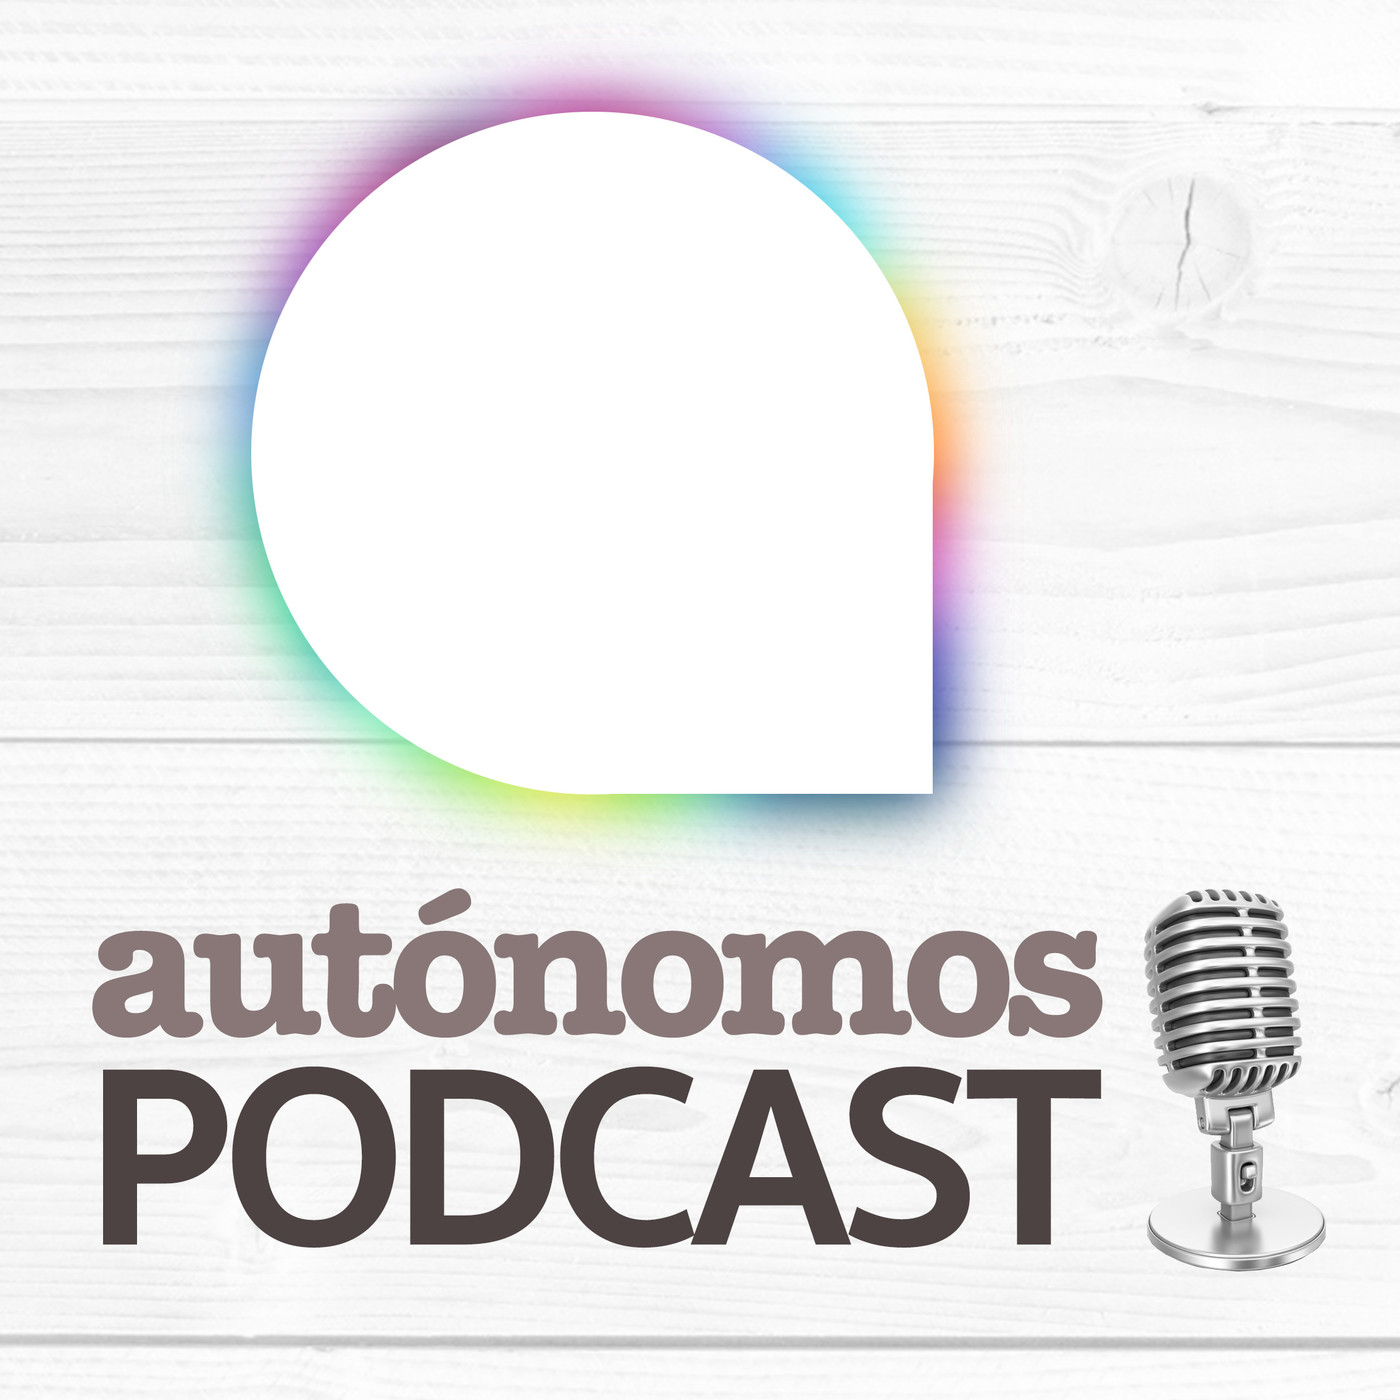 Autónomos Podcast